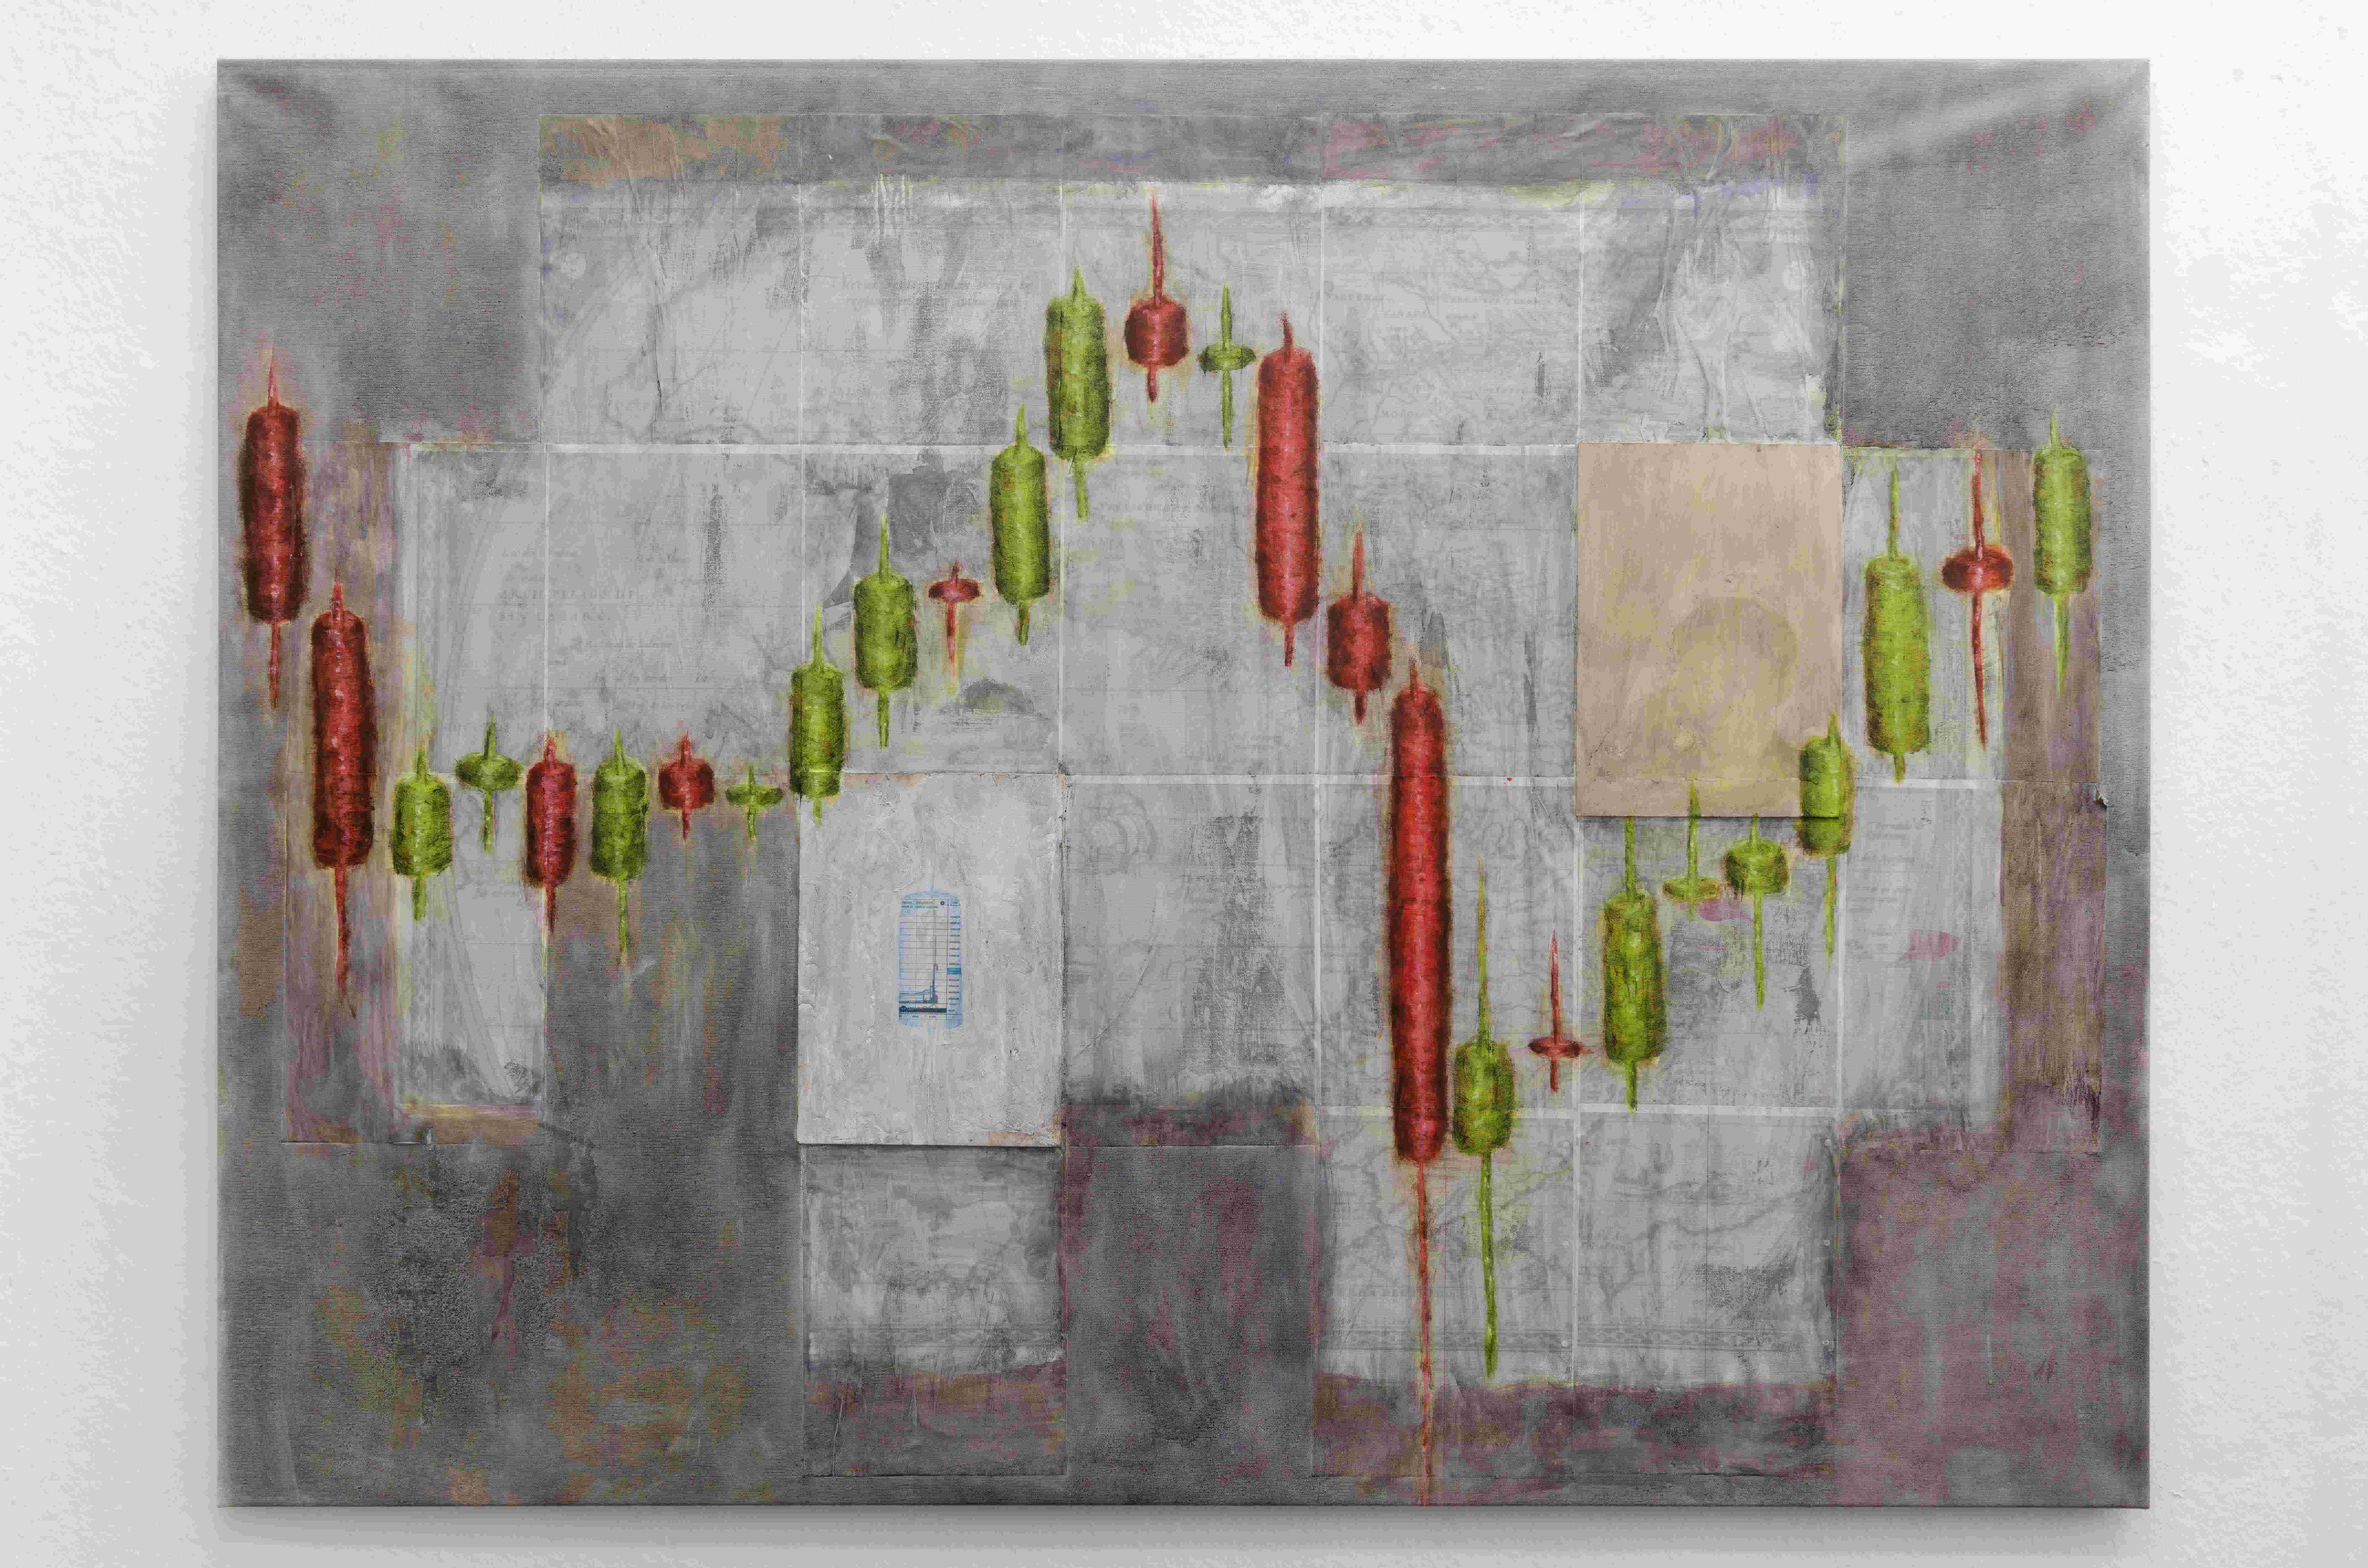 Andy Schumacher, zhu su, 2020 crash, americas, 2022, Oil, wood, paper on canvas, 155cm x 116cm